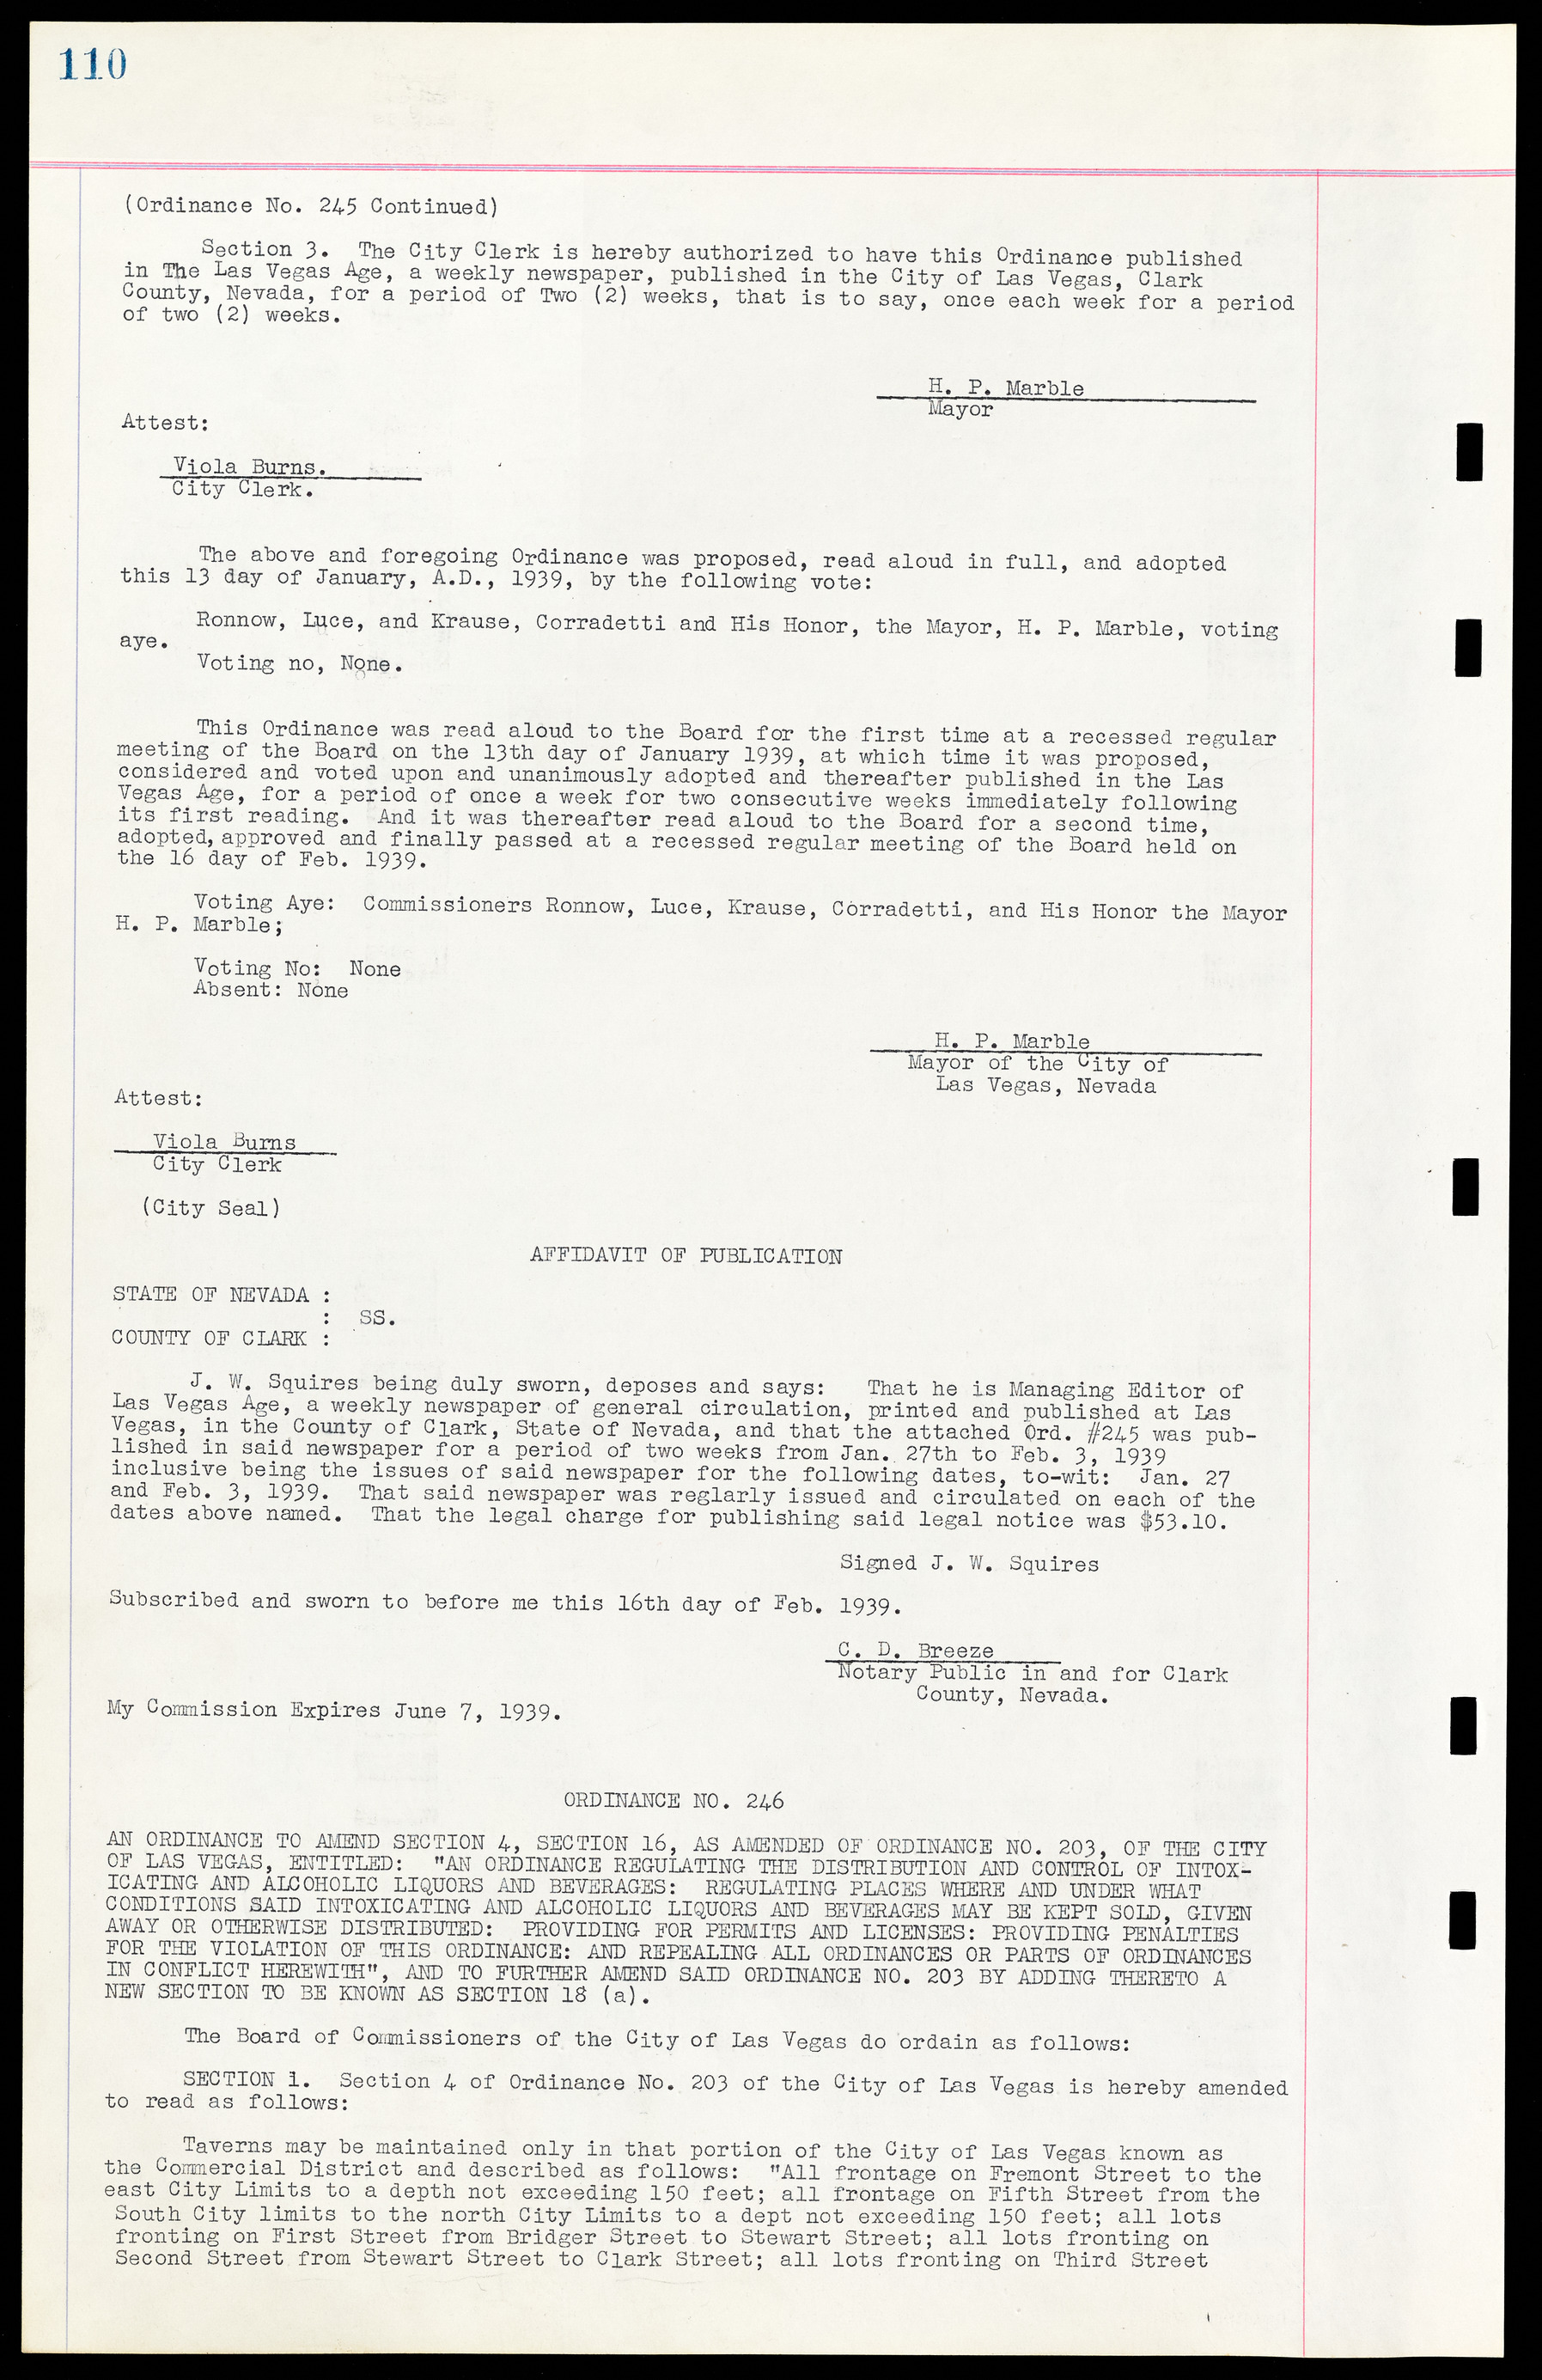 Las Vegas City Ordinances, March 31, 1933 to October 25, 1950, lvc000014-130